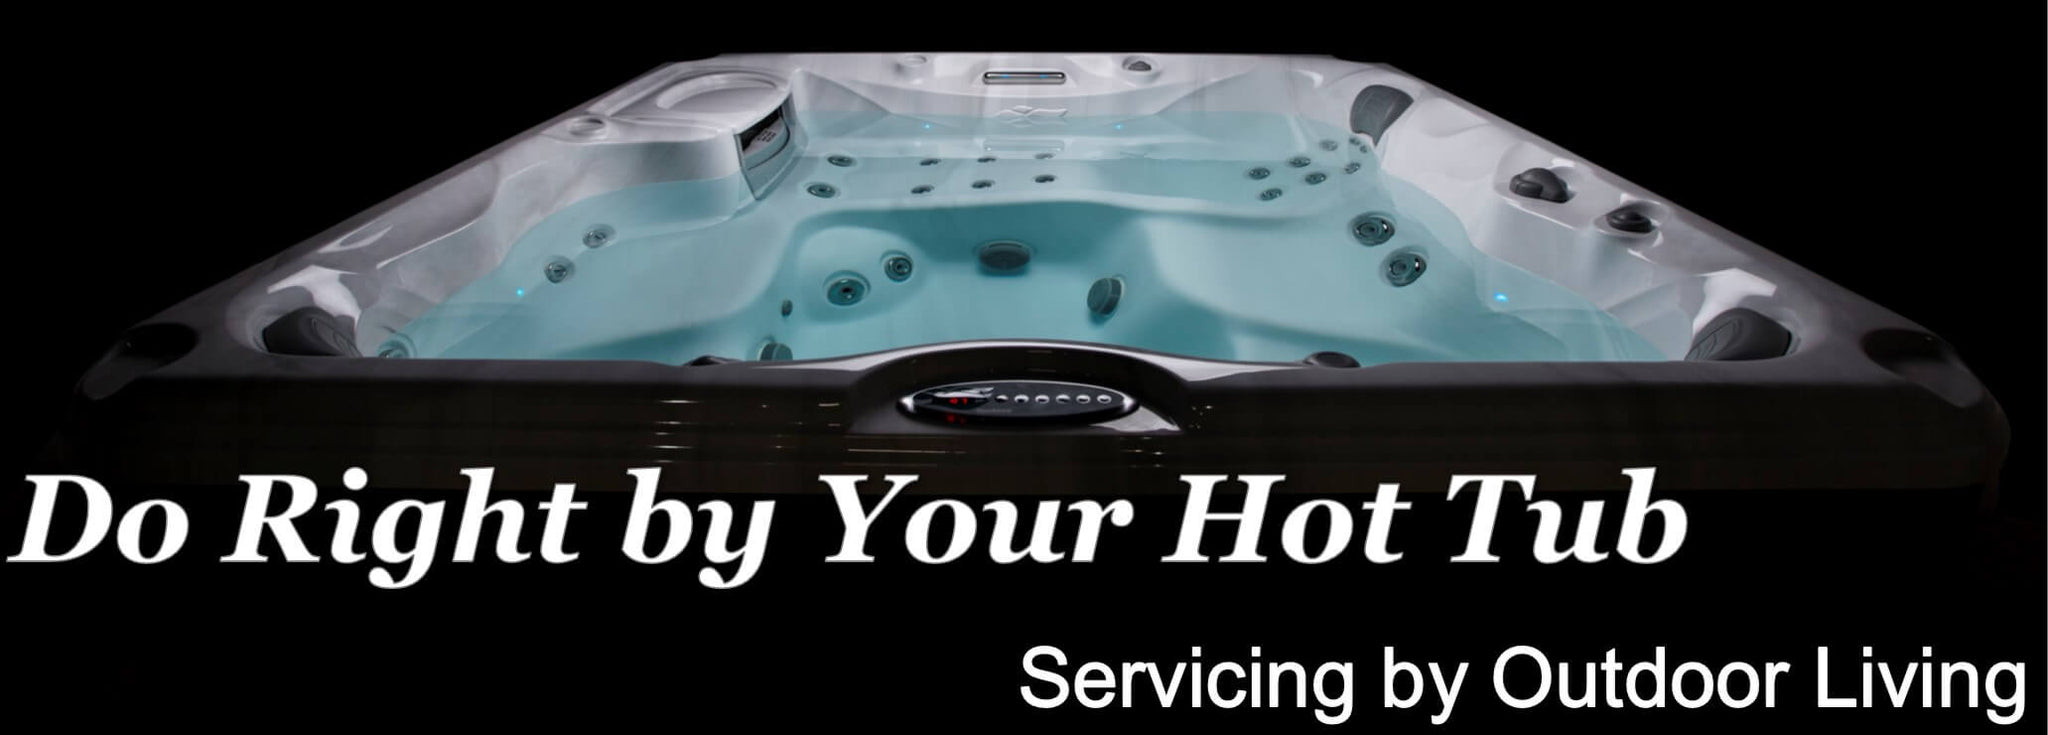 Hot Tub Servicing Repair And Maintenance Outdoor Living